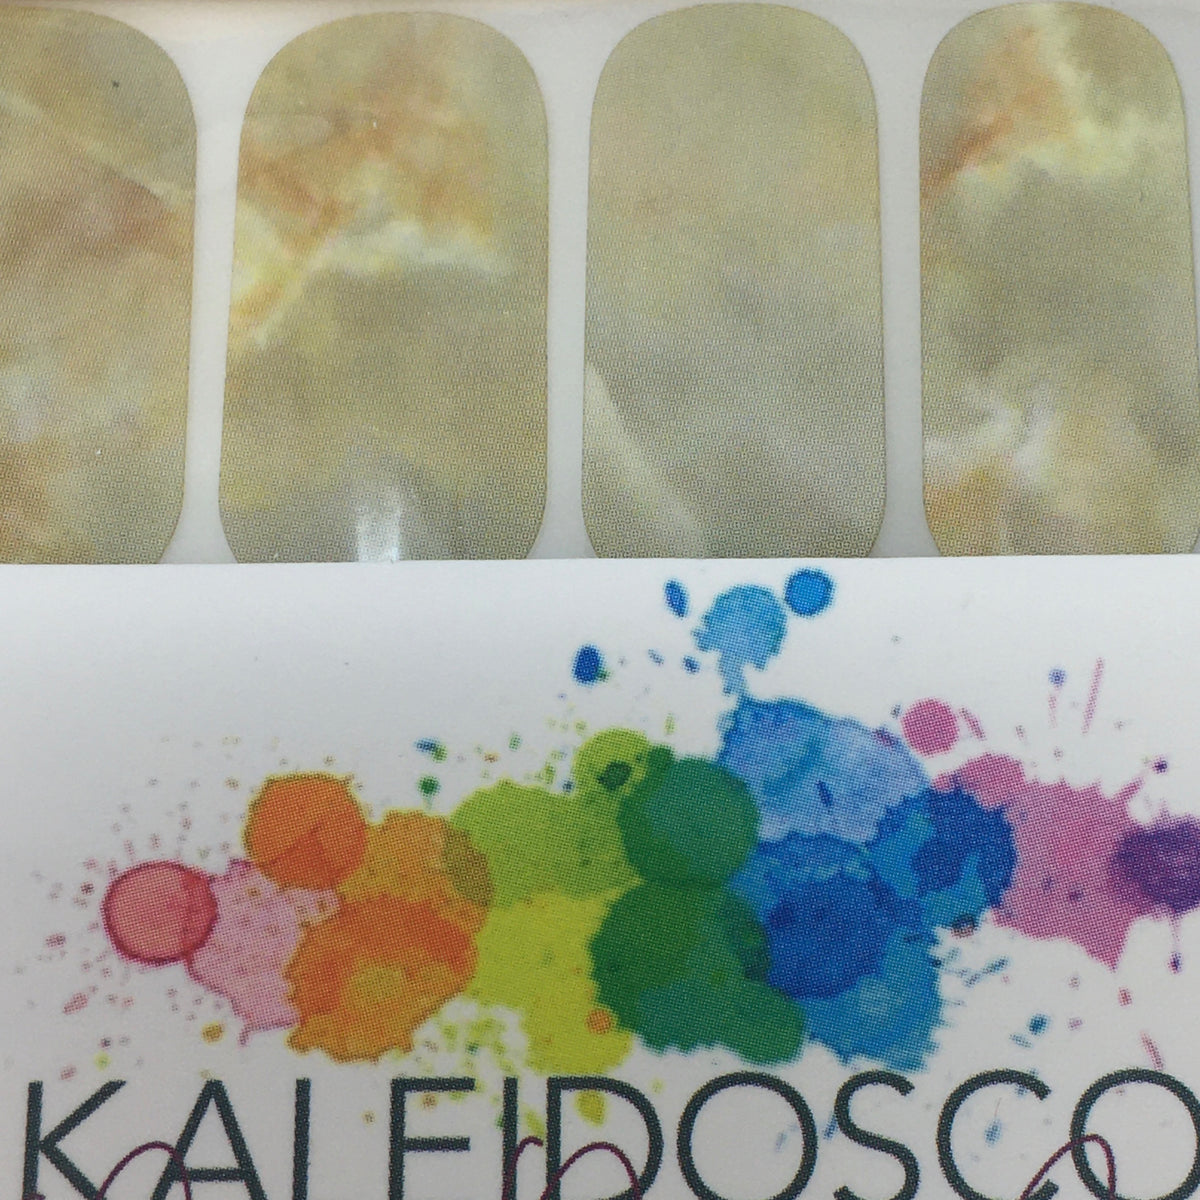 Kaleidoscope Nail Strip Everyday Collection